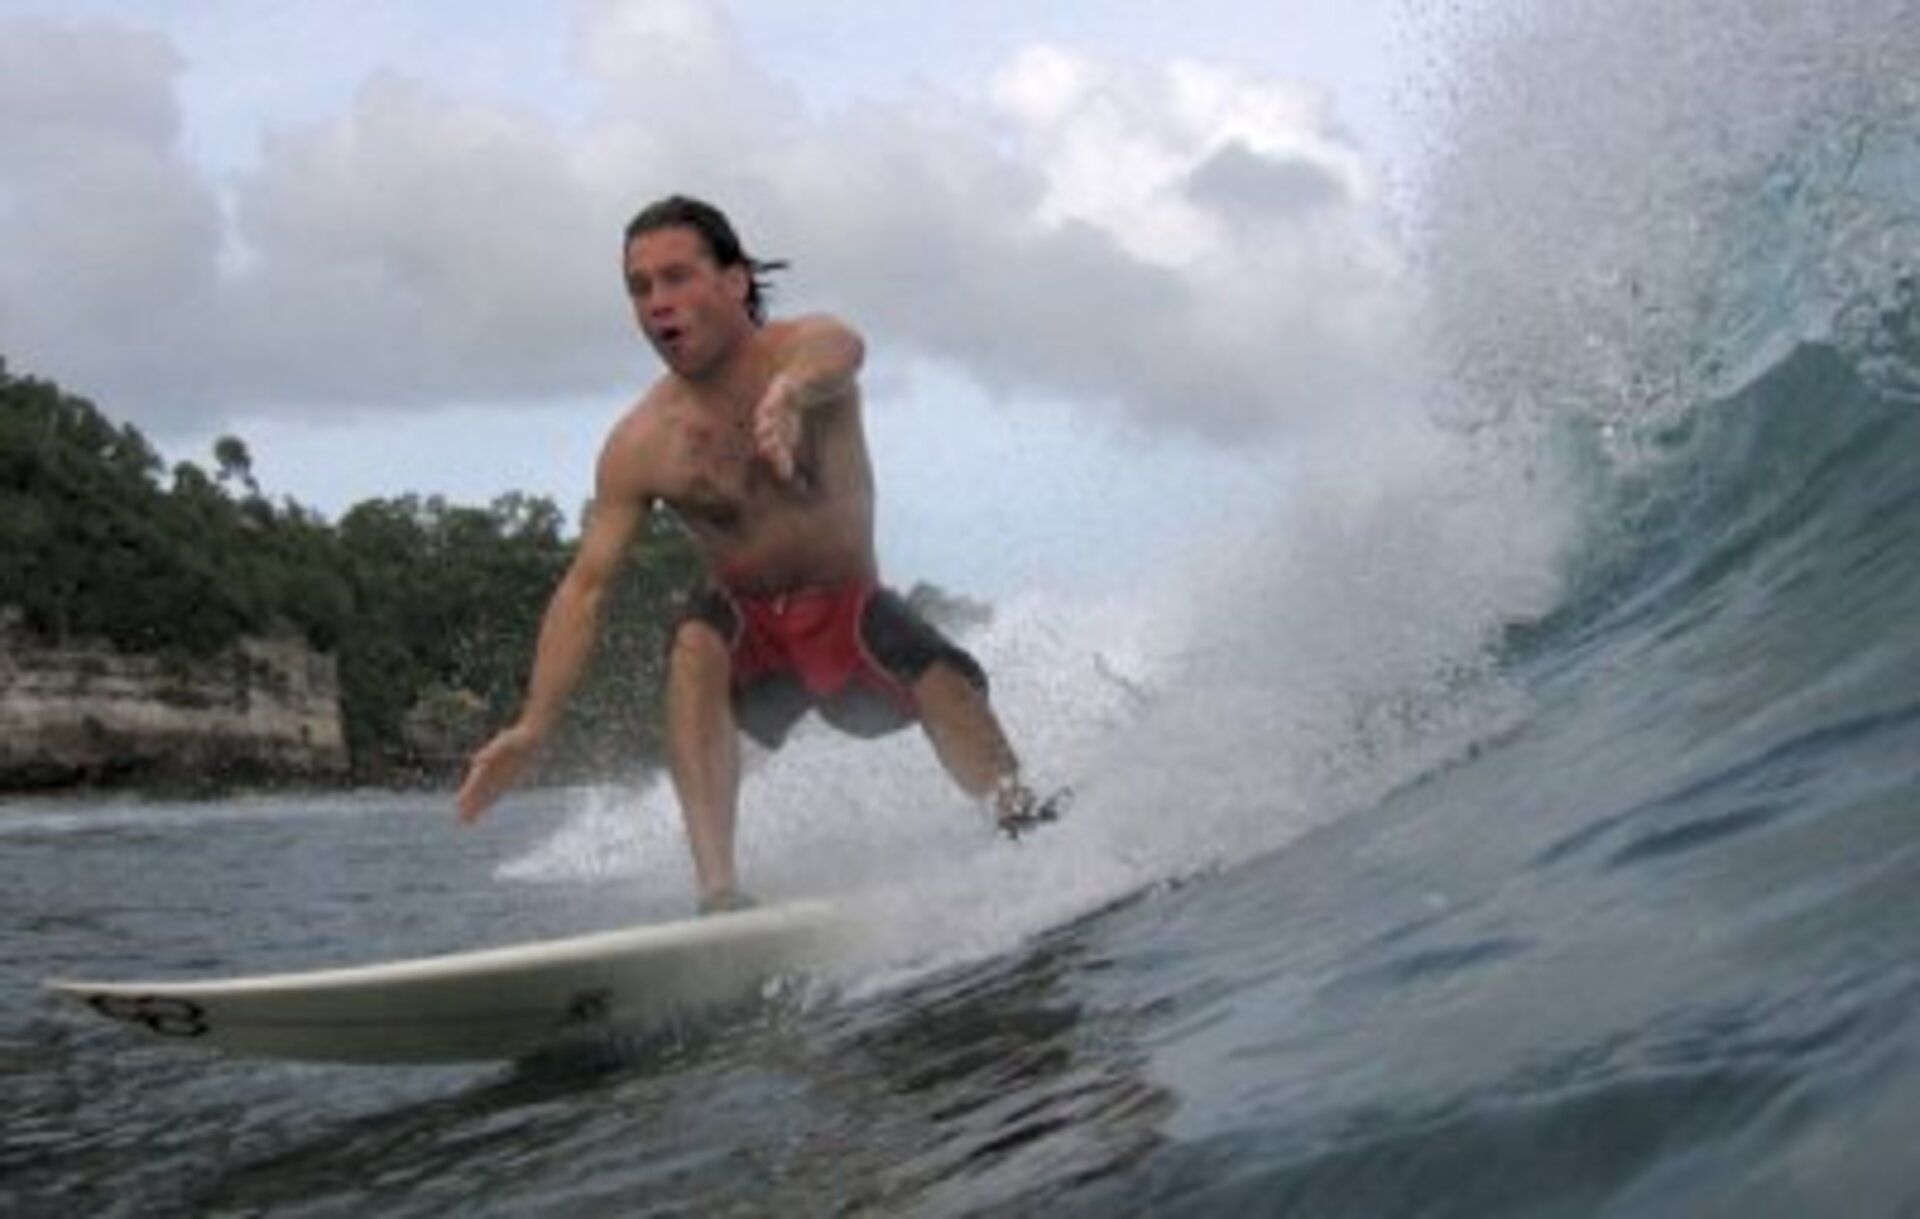 Eric surfing